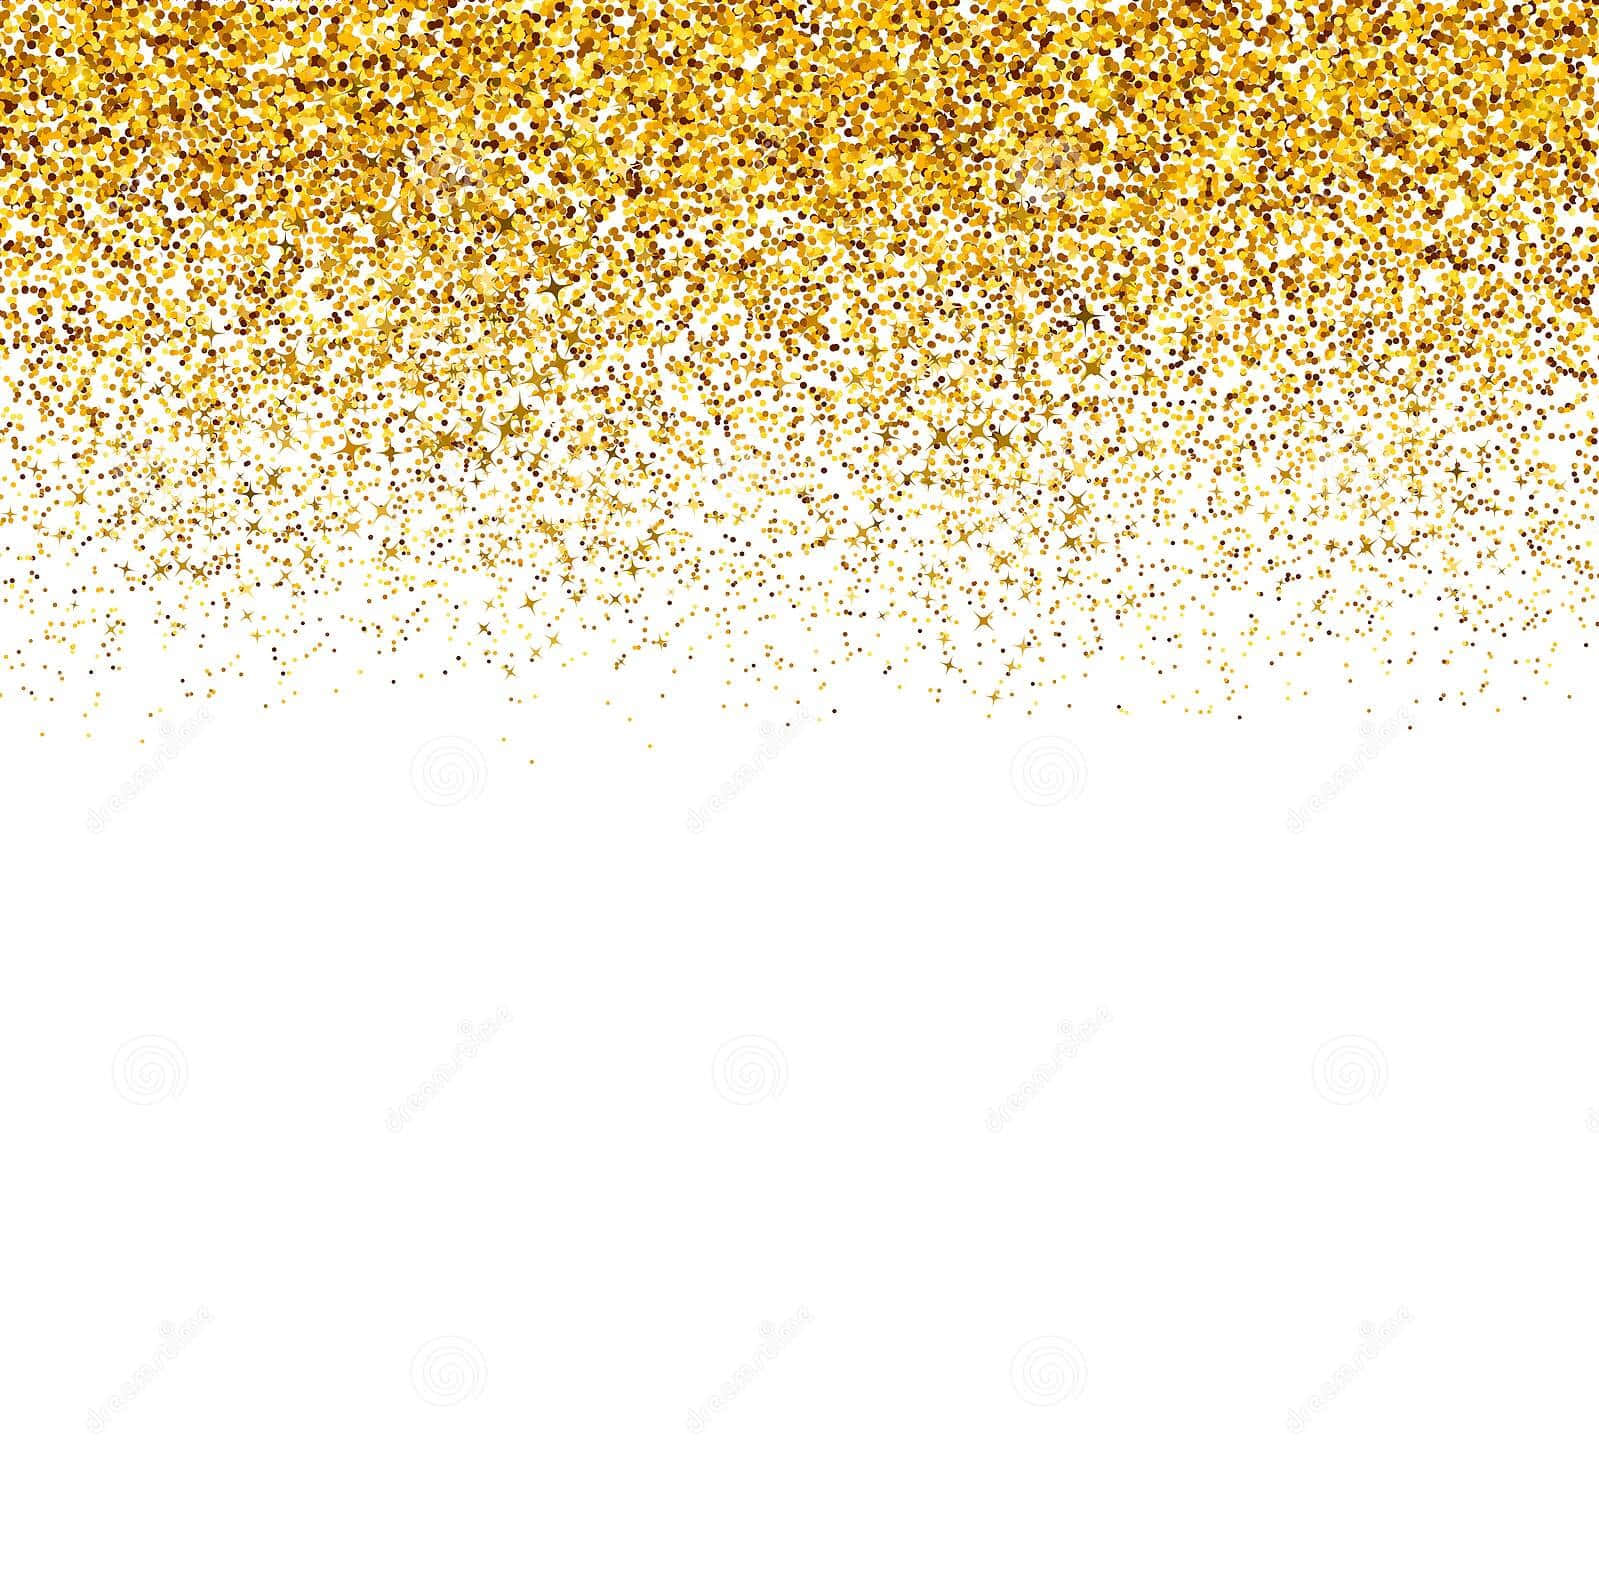 Gold Glitter Background Stock Photo